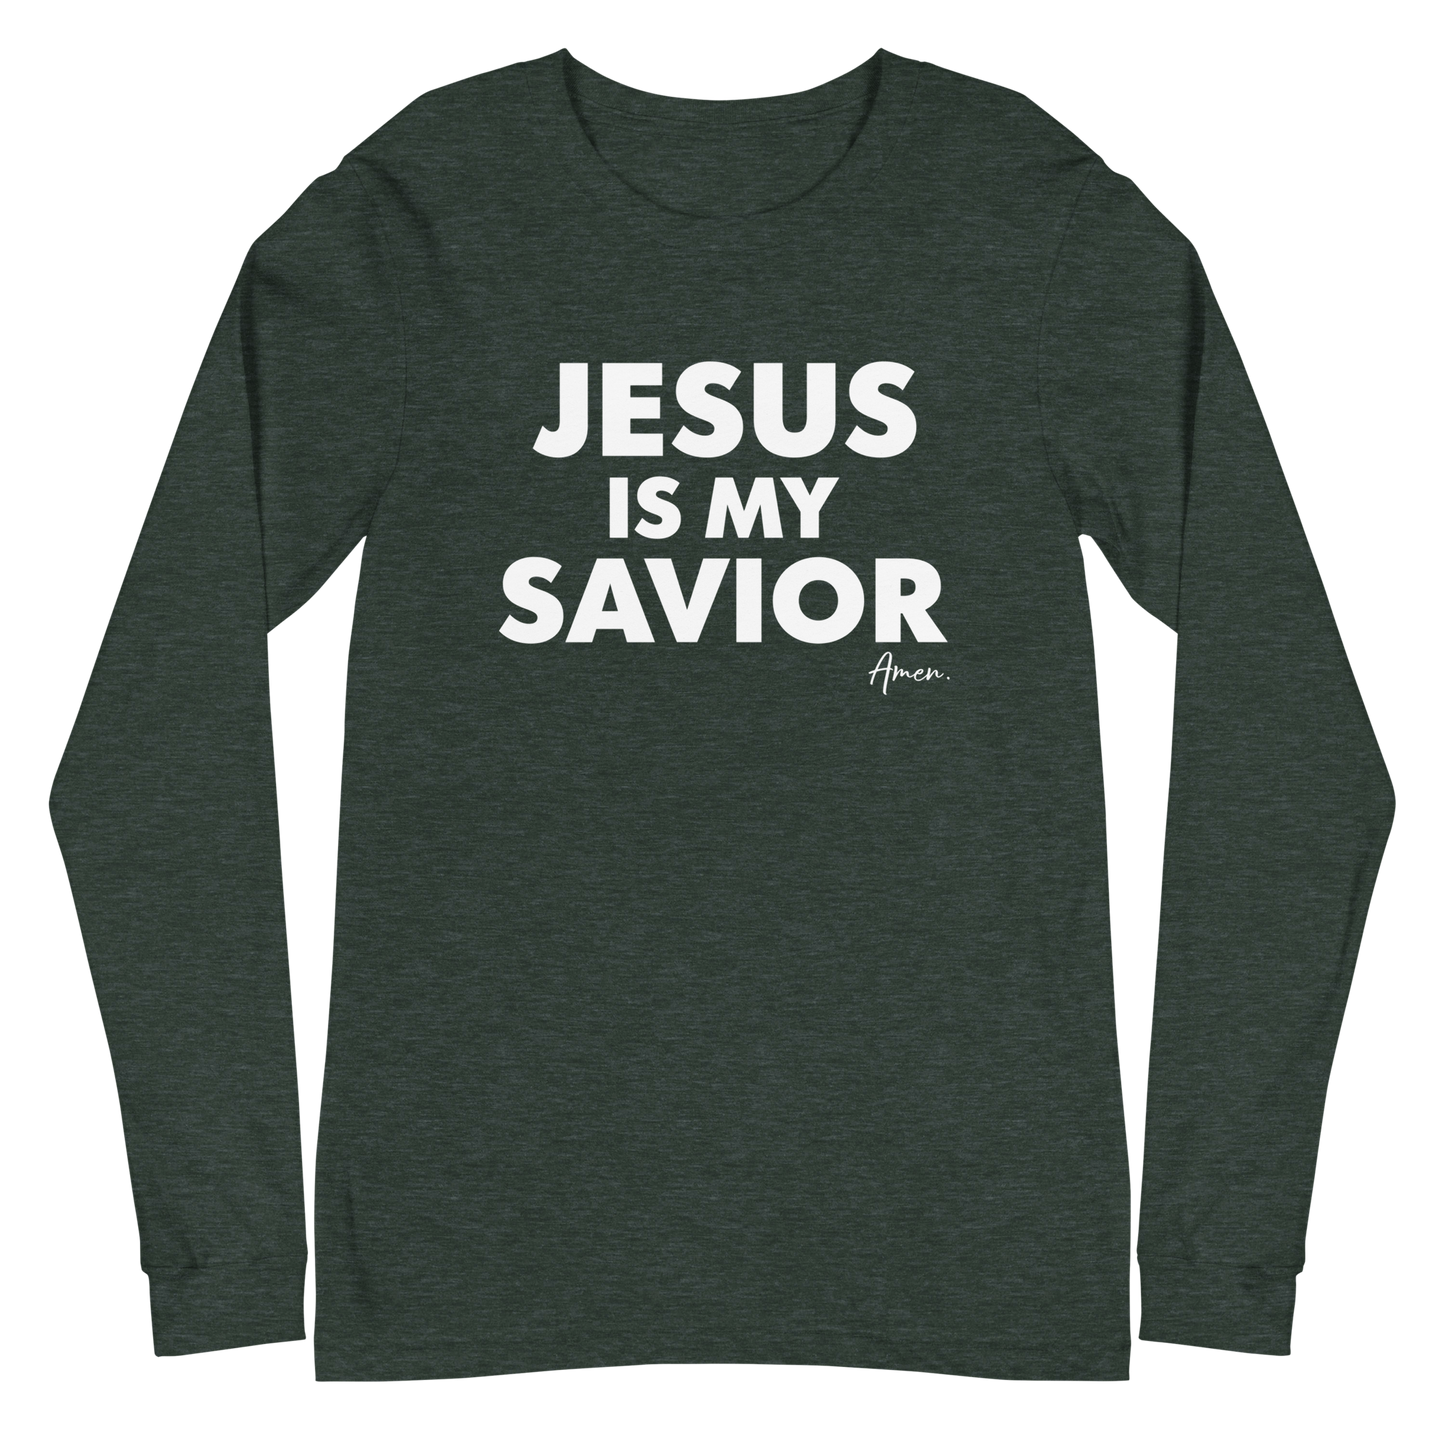 Jesus is my Savior - Men's Long Sleeve